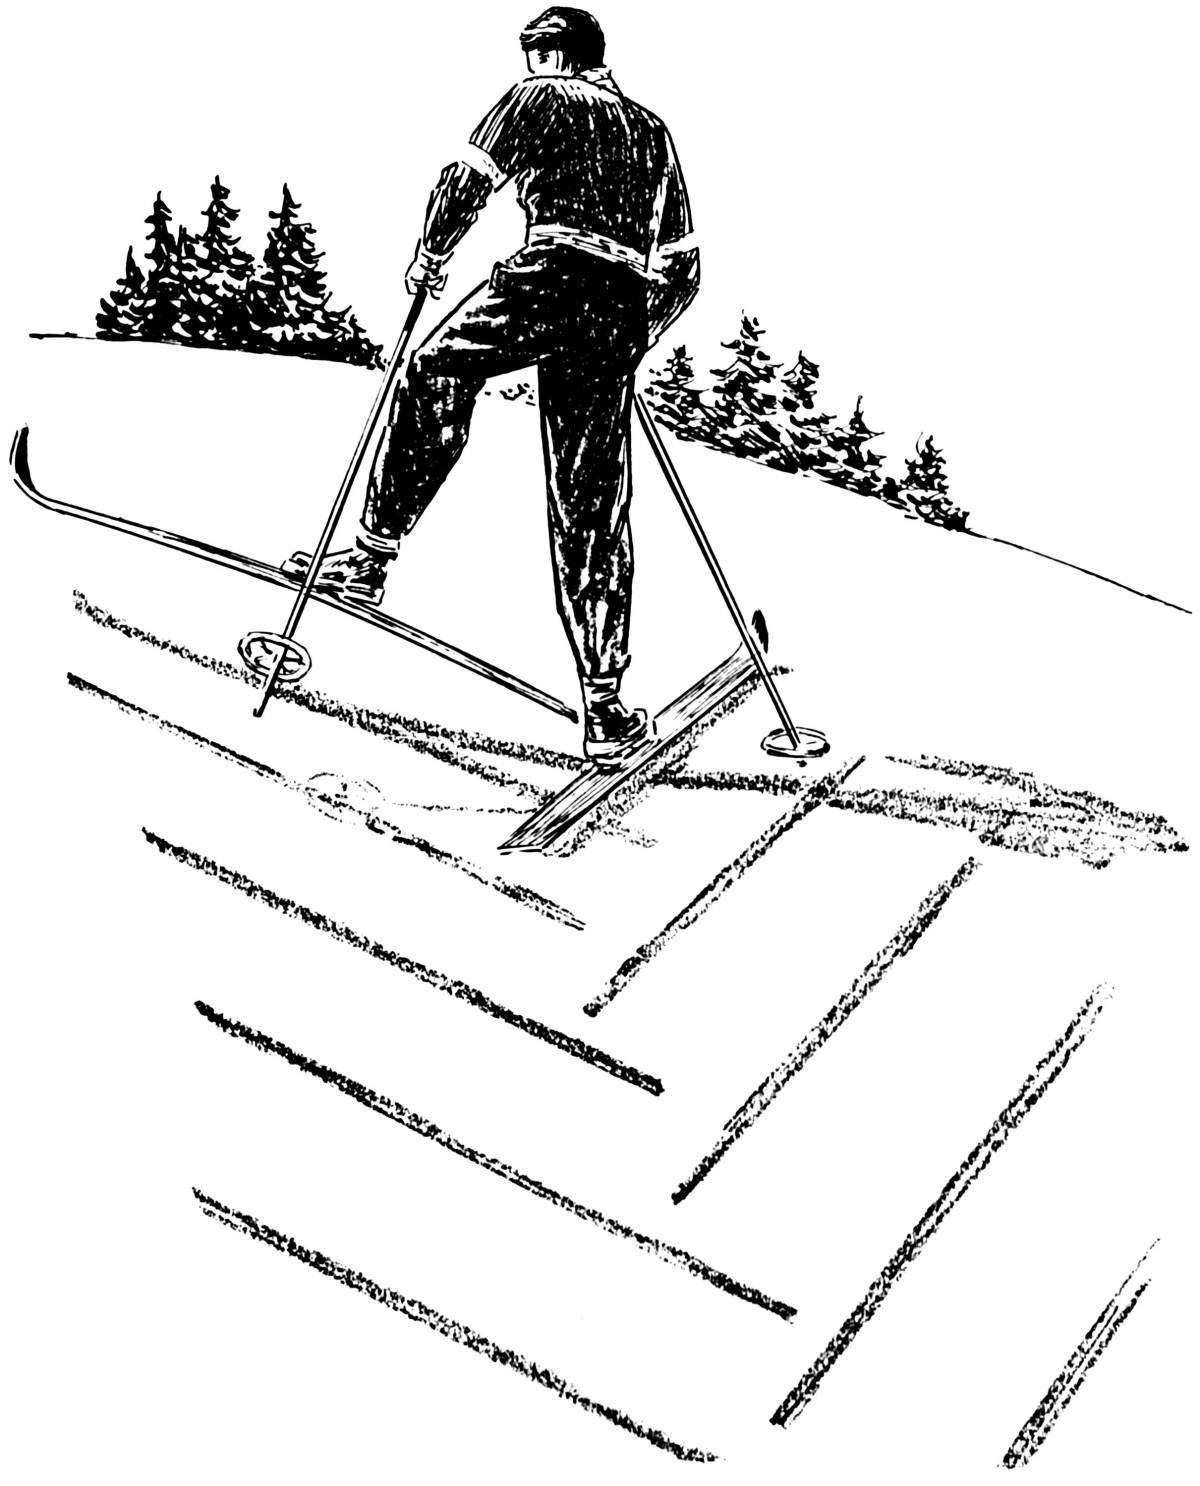 Skier in motion #8